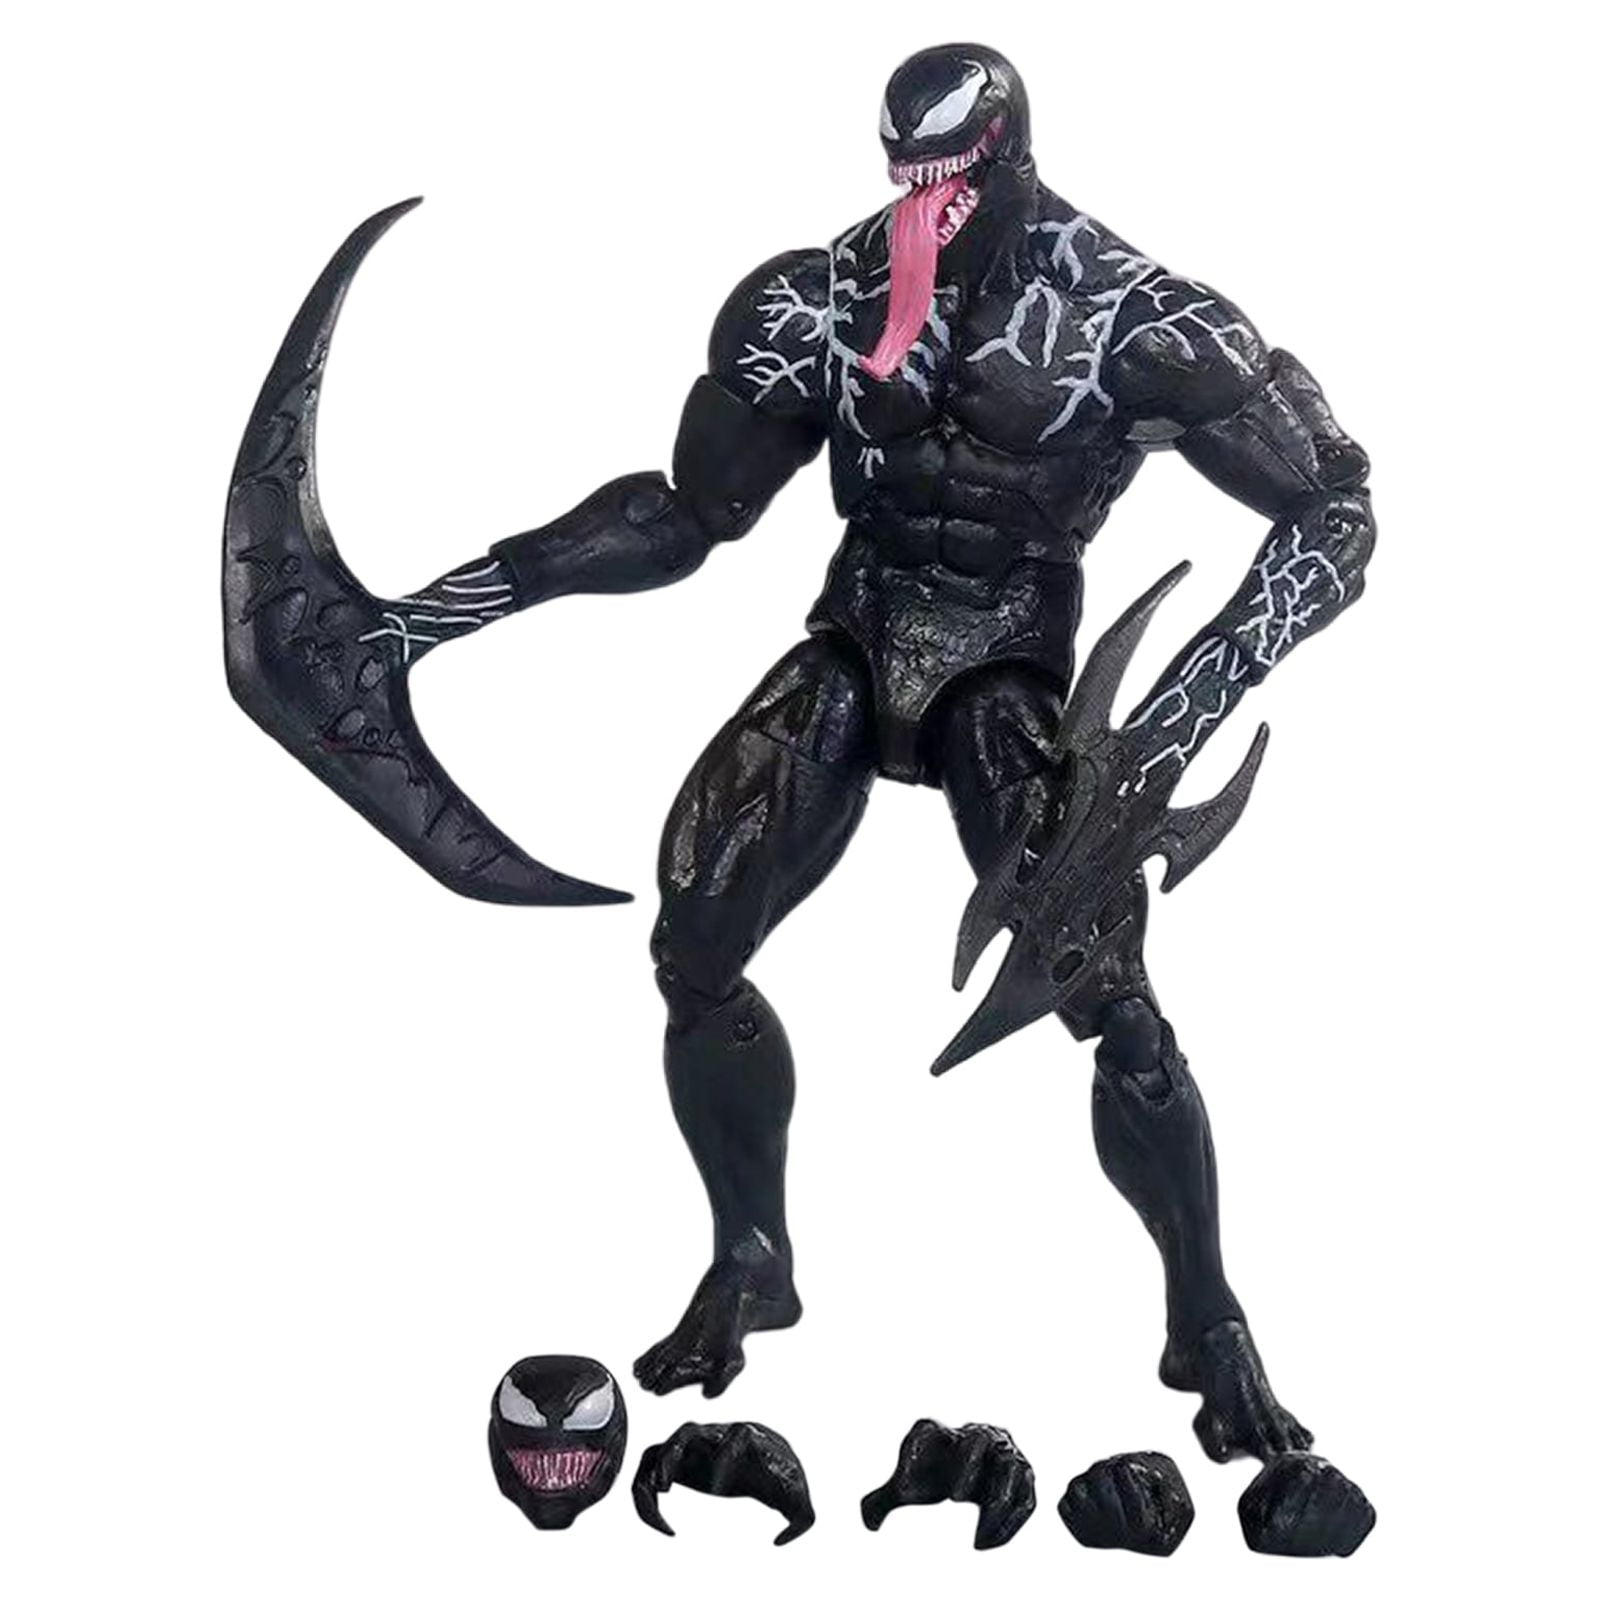 Legends Series Venom Action Figure, Includes Accessories 7.08in ...